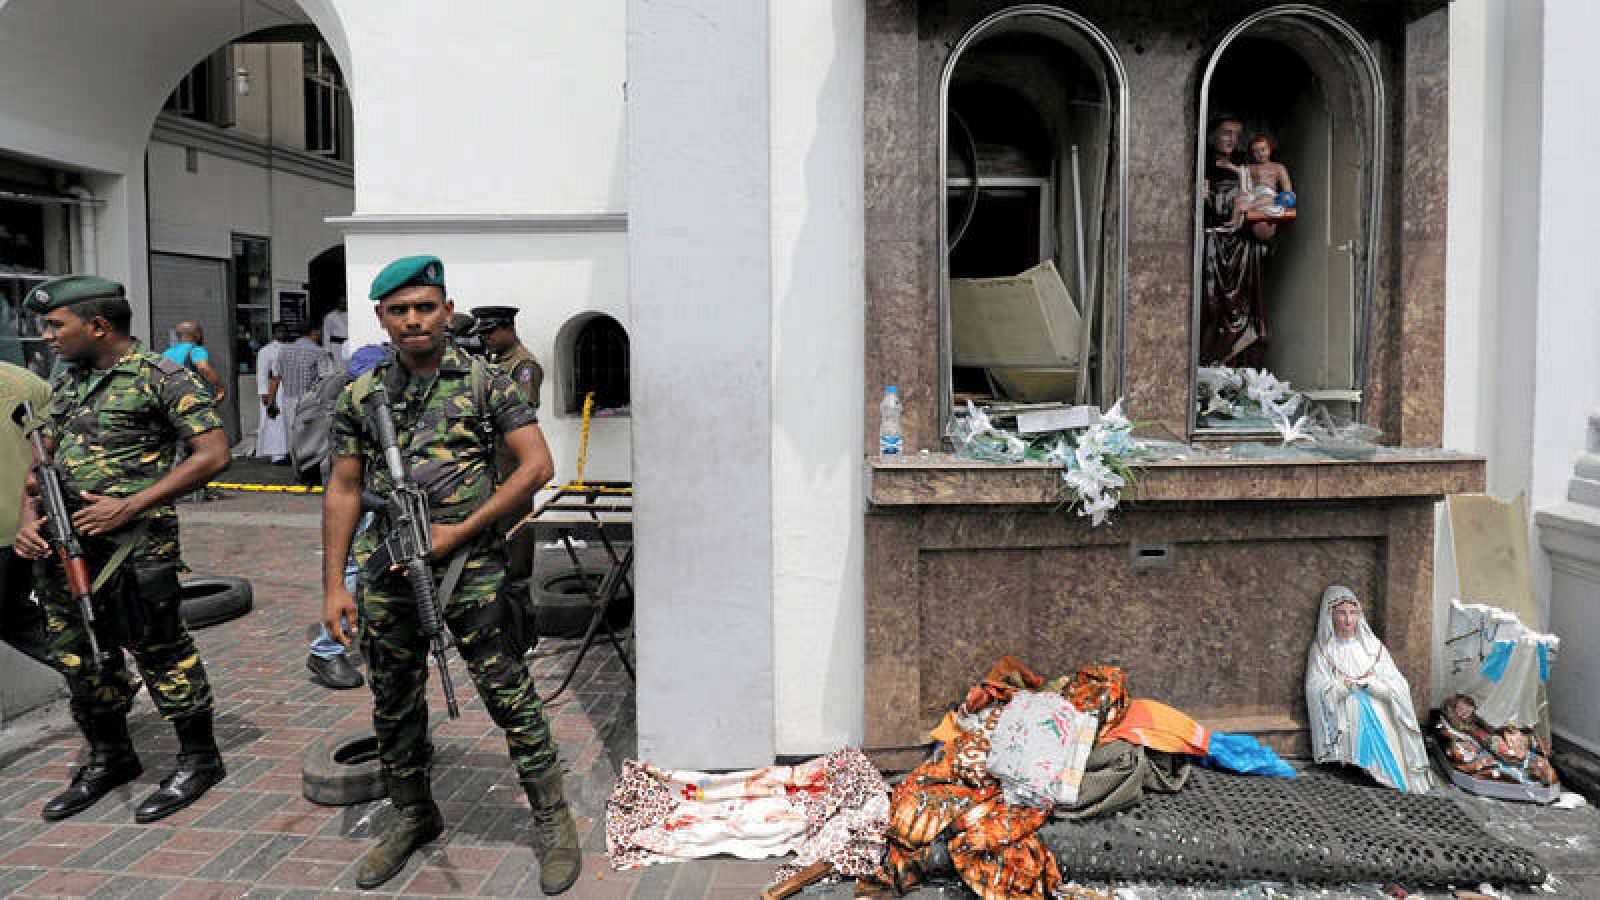 Resultado de imagen para atentado en sri lanka pascua 2019